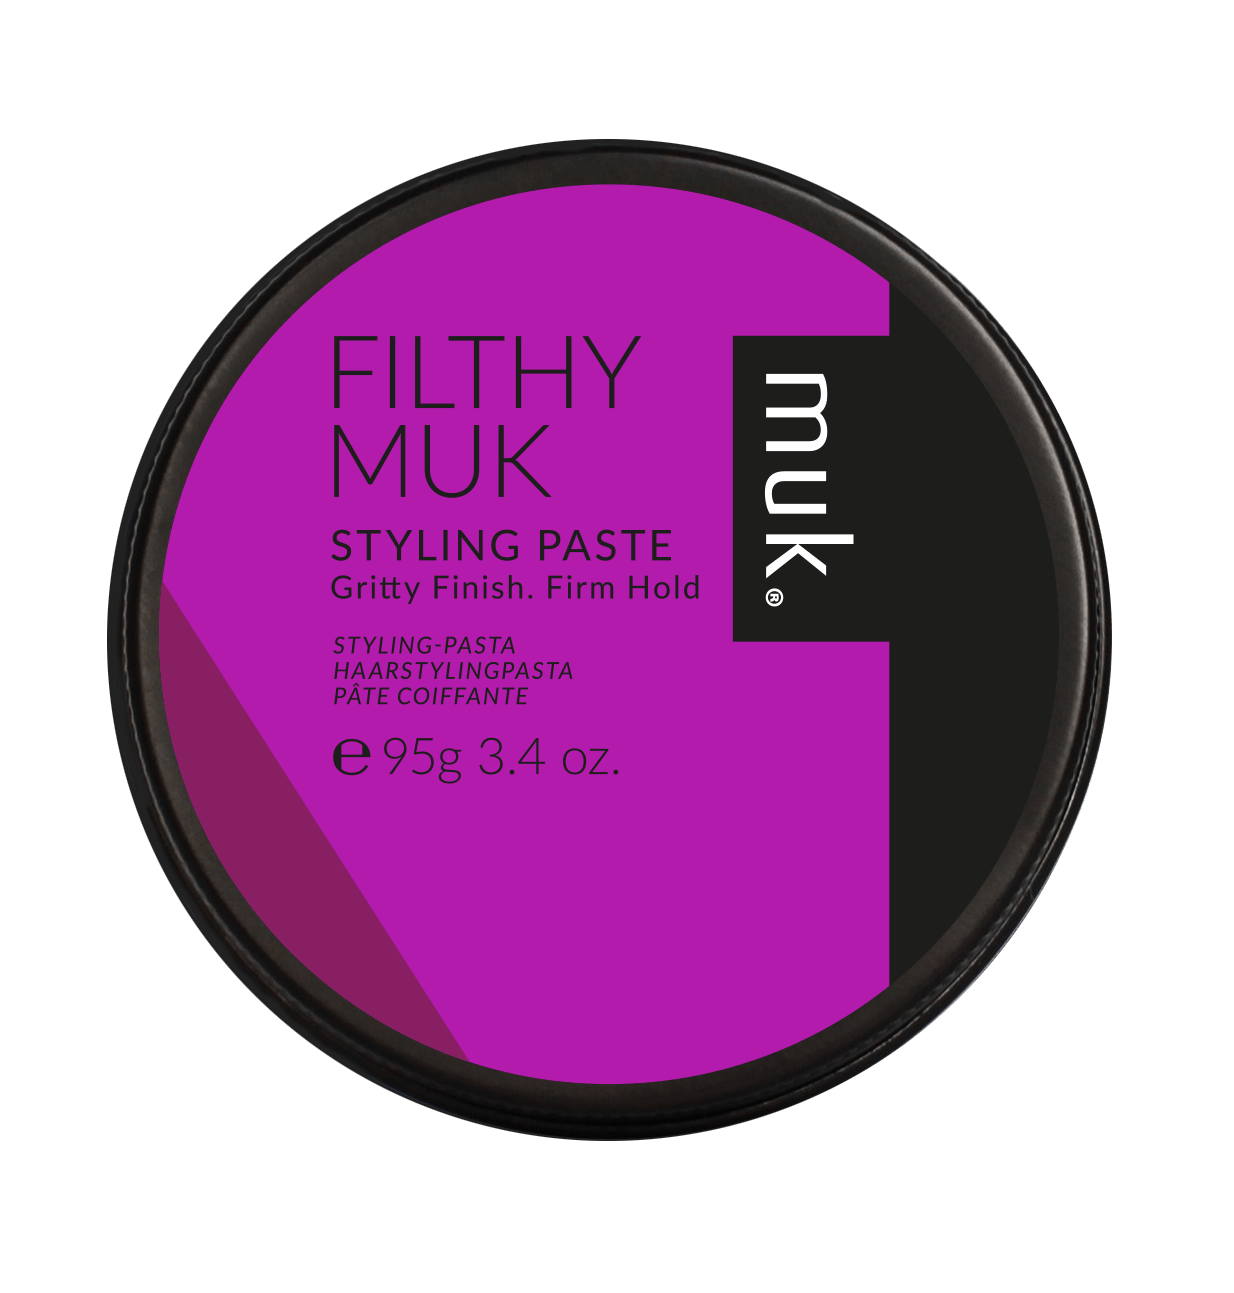 Muk Filthy muk Styling Paste 95g